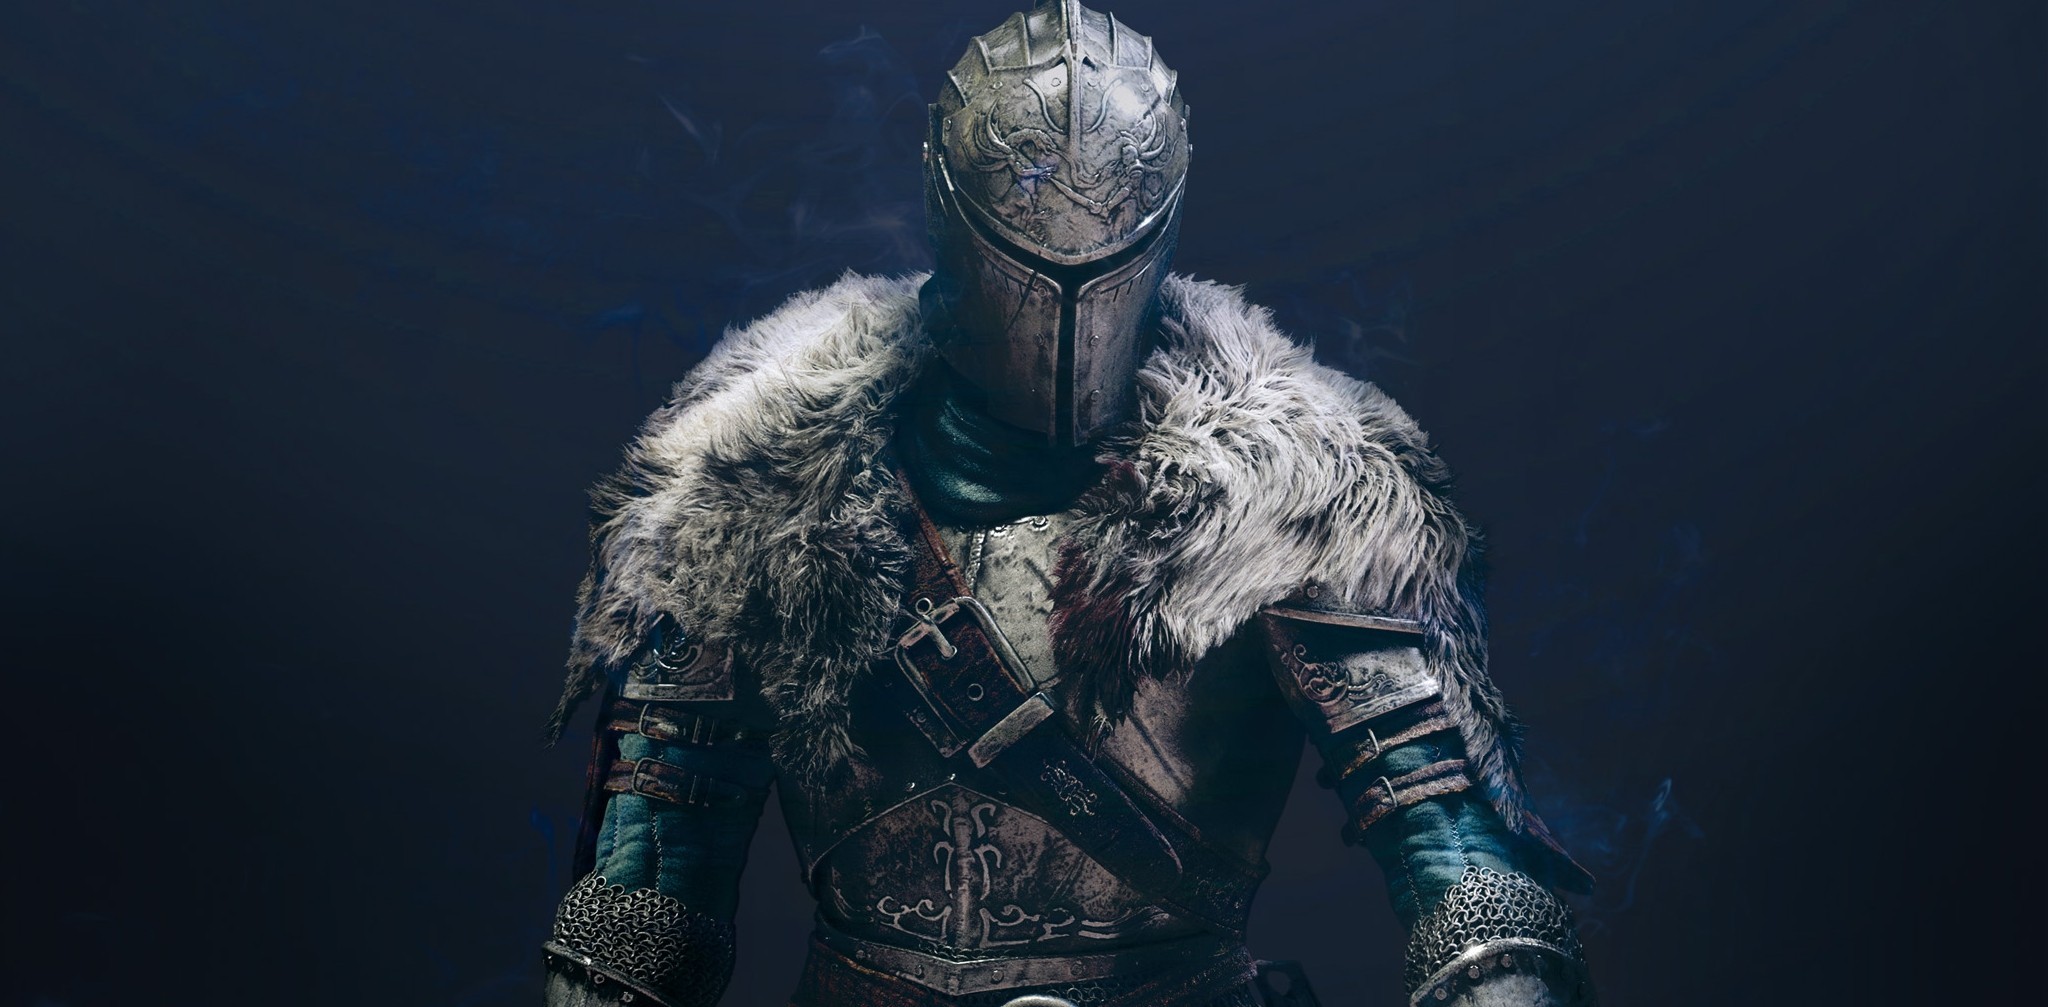 General 2048x1007 knight fantasy art simple background video games Dark Souls II Dark Souls video game art armor